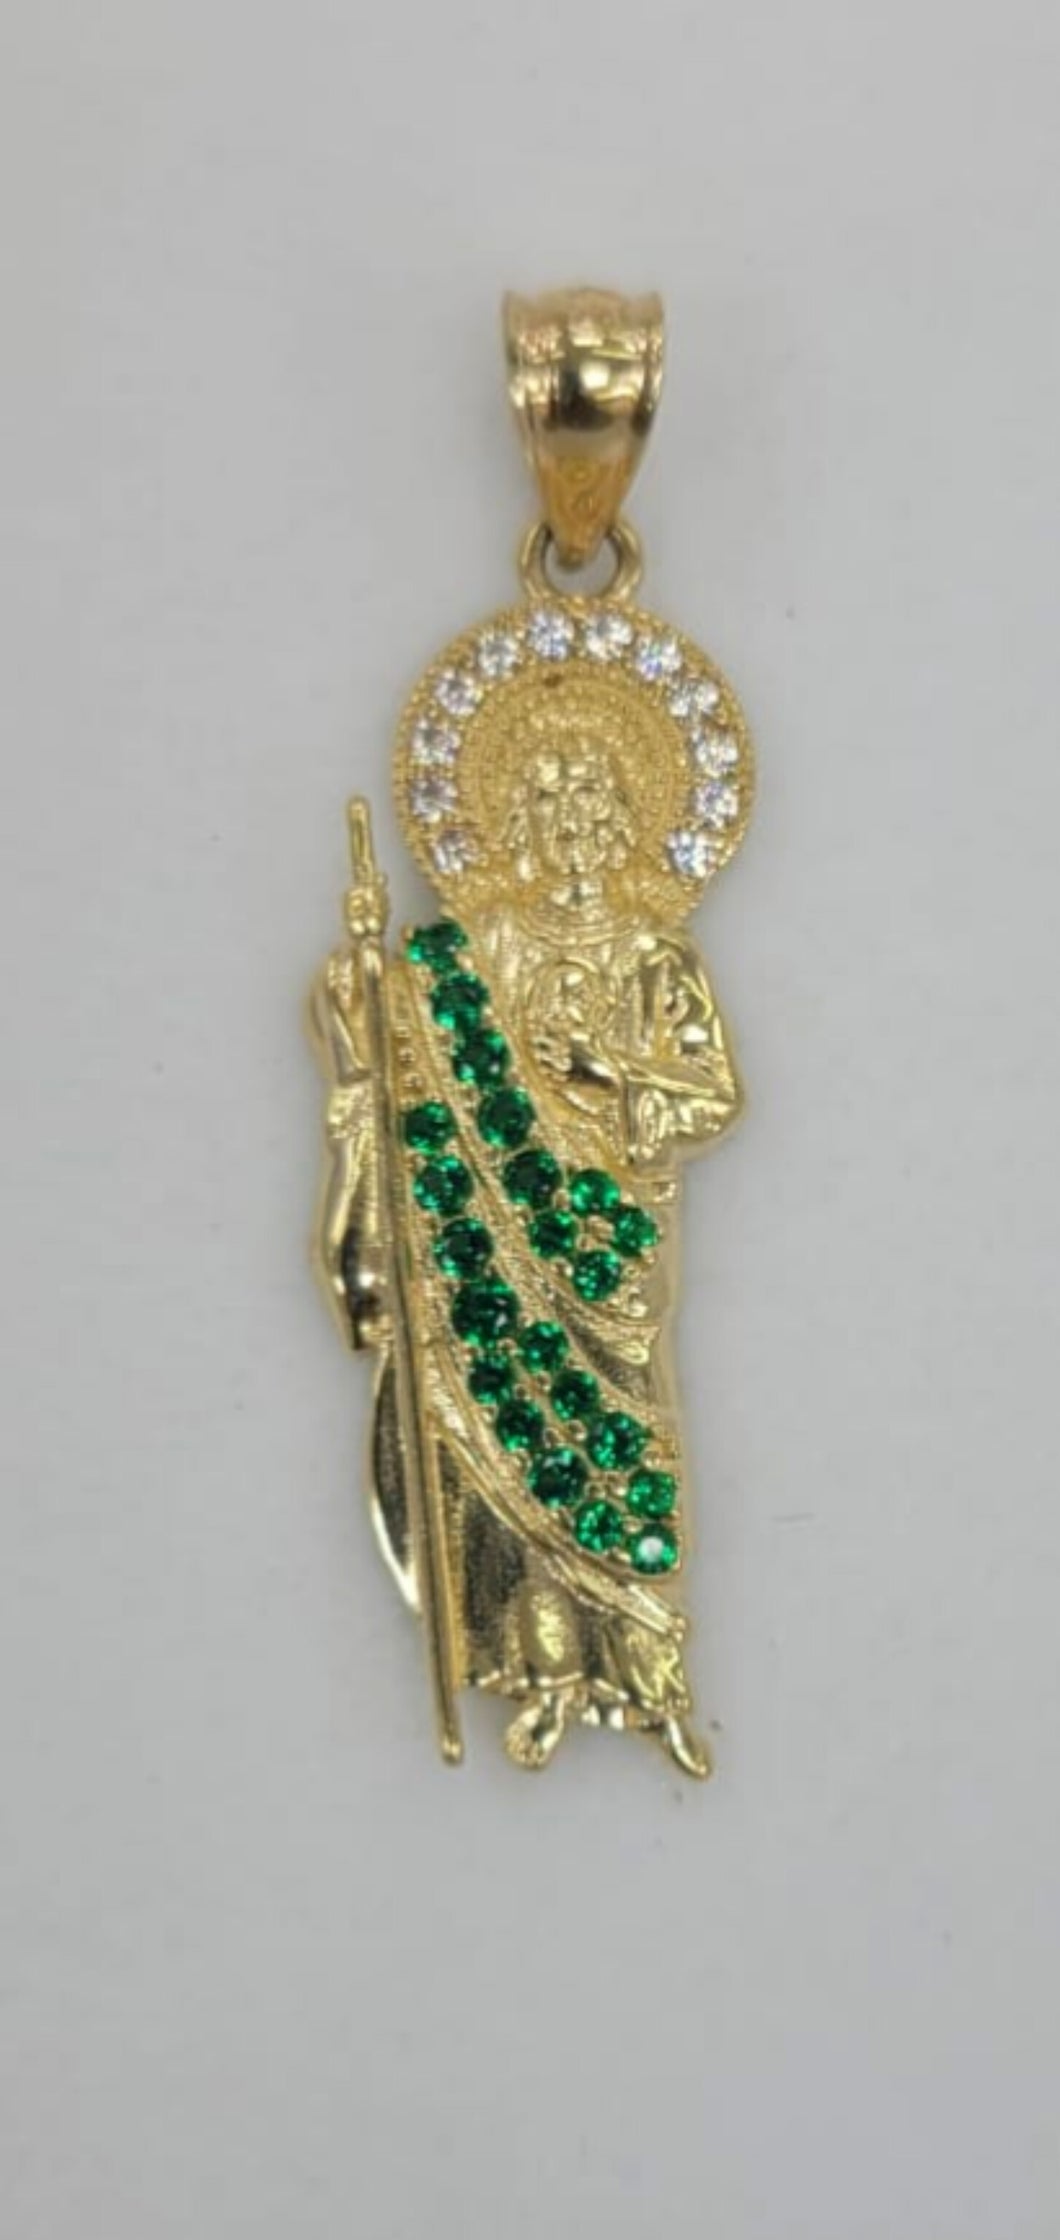 10KT  Saint JUDE  Real Tricolor Gold Pendant, Bail 5mm 2.46 GRM